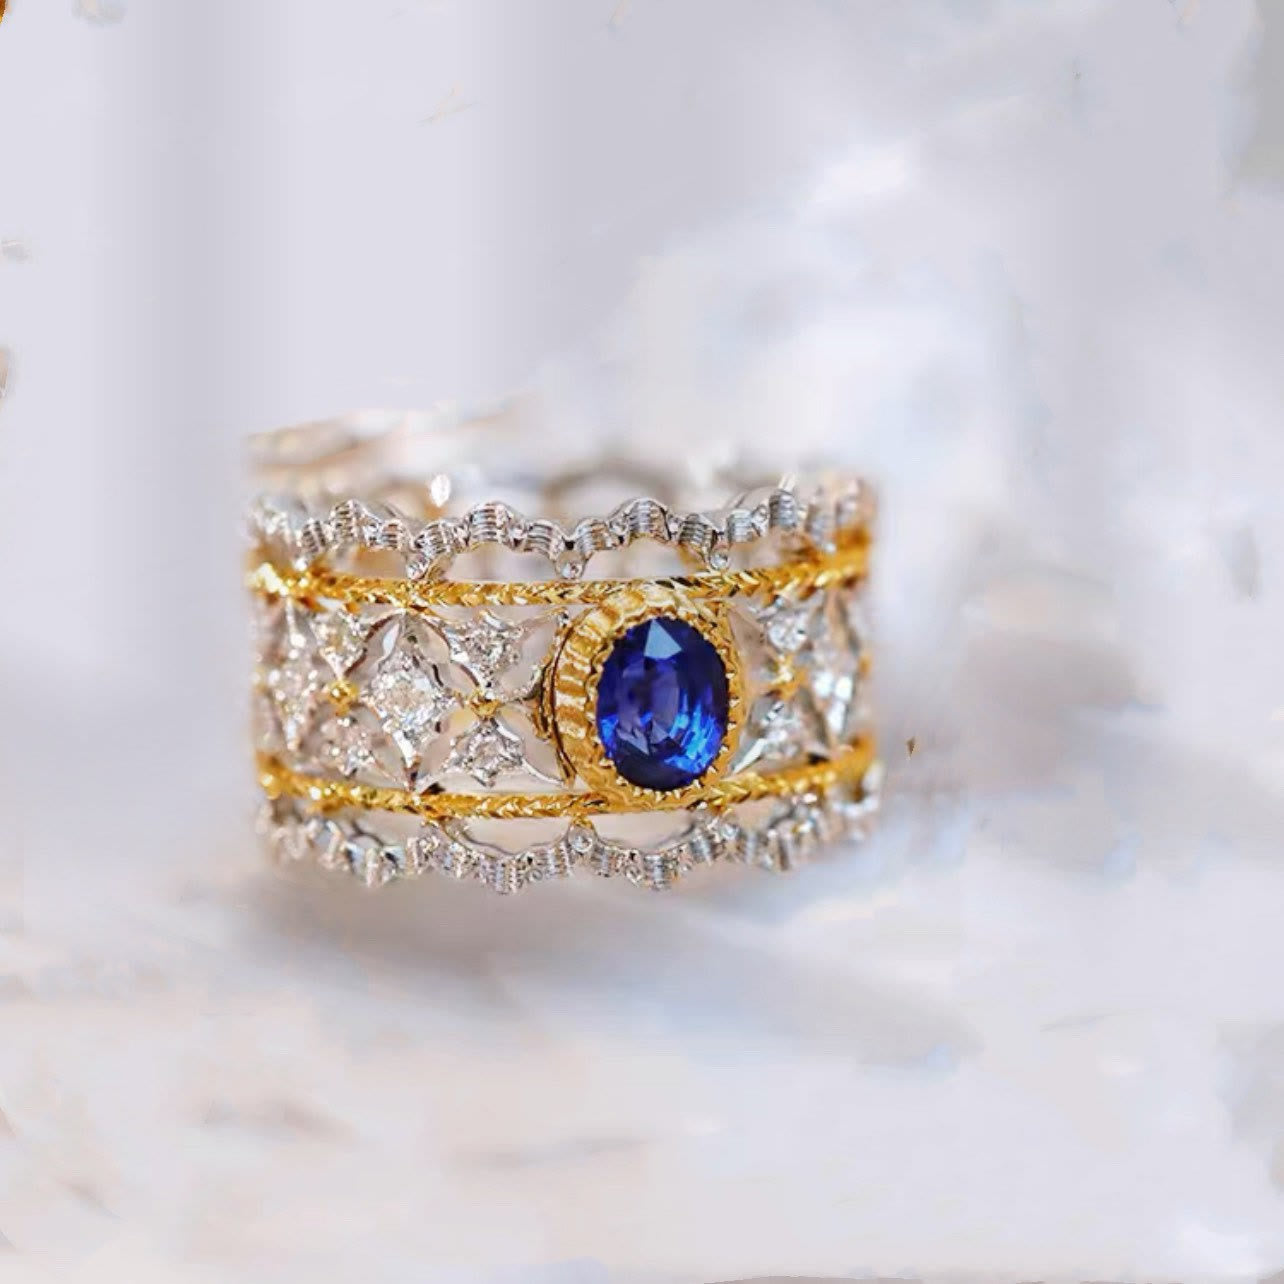 Vintage Lace Sapphire Engagement Ring